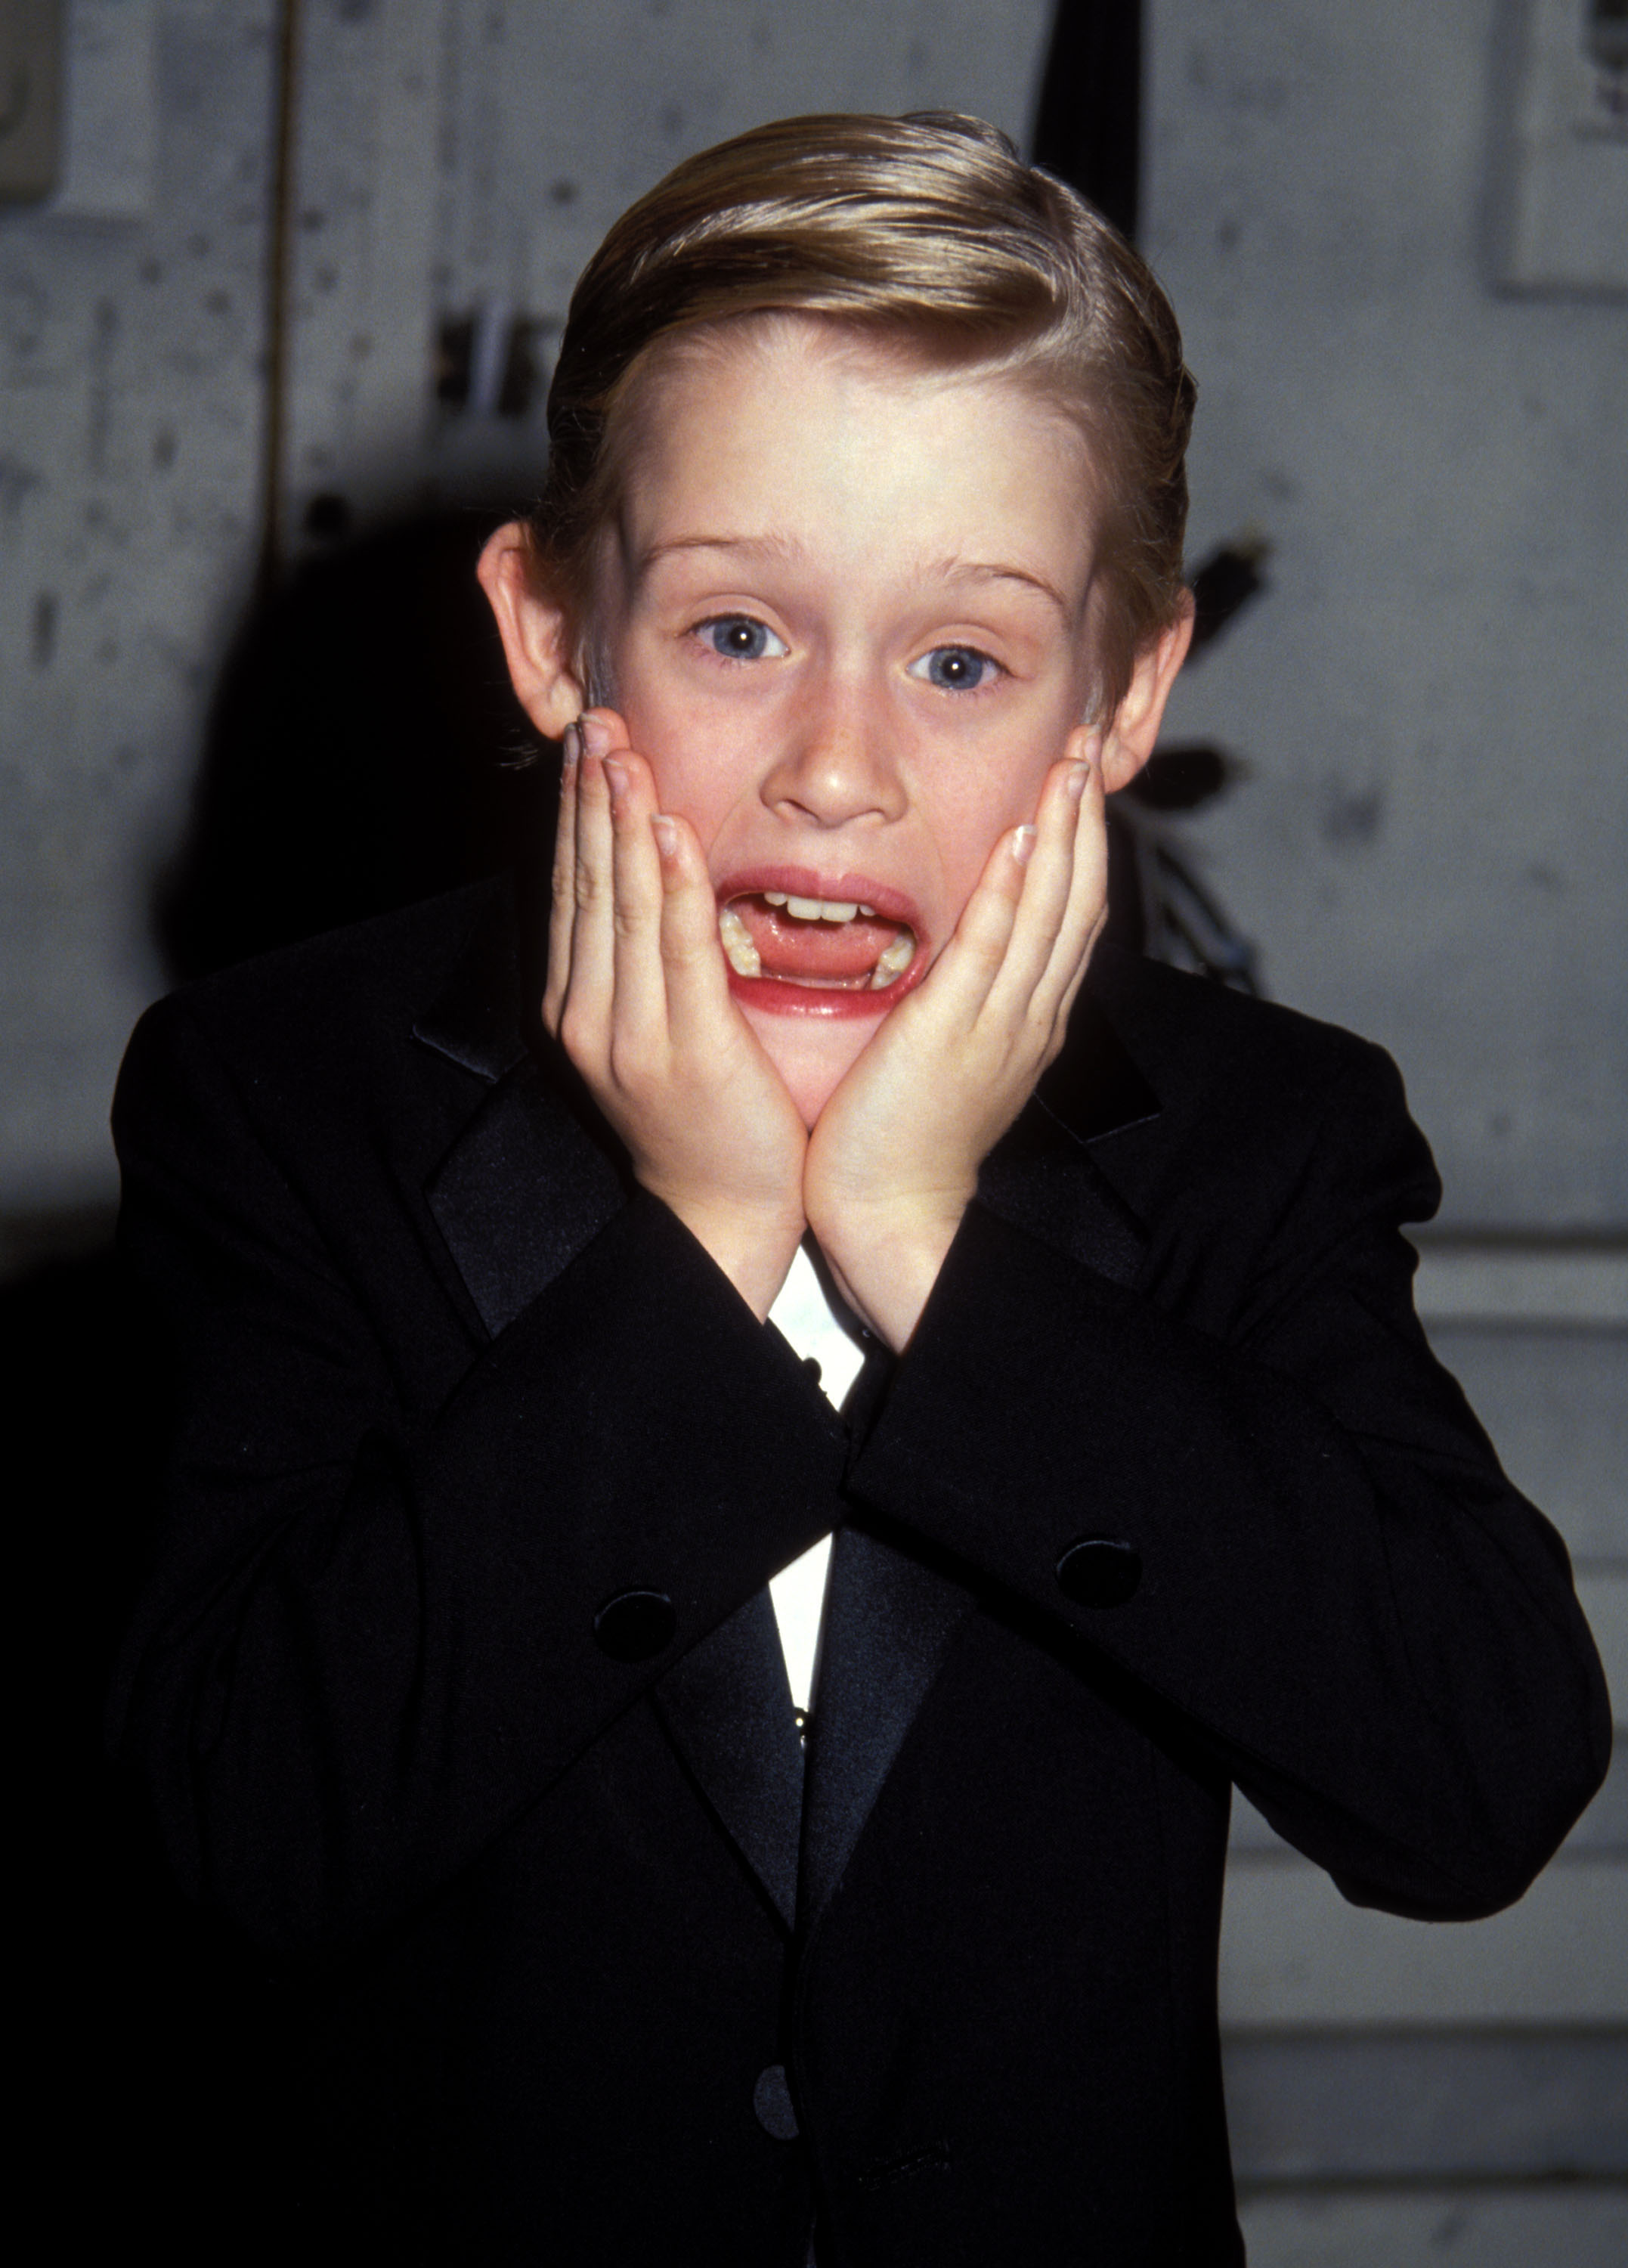 Macaulay Culkin à Hollywood en 1991 | Source : Getty Images